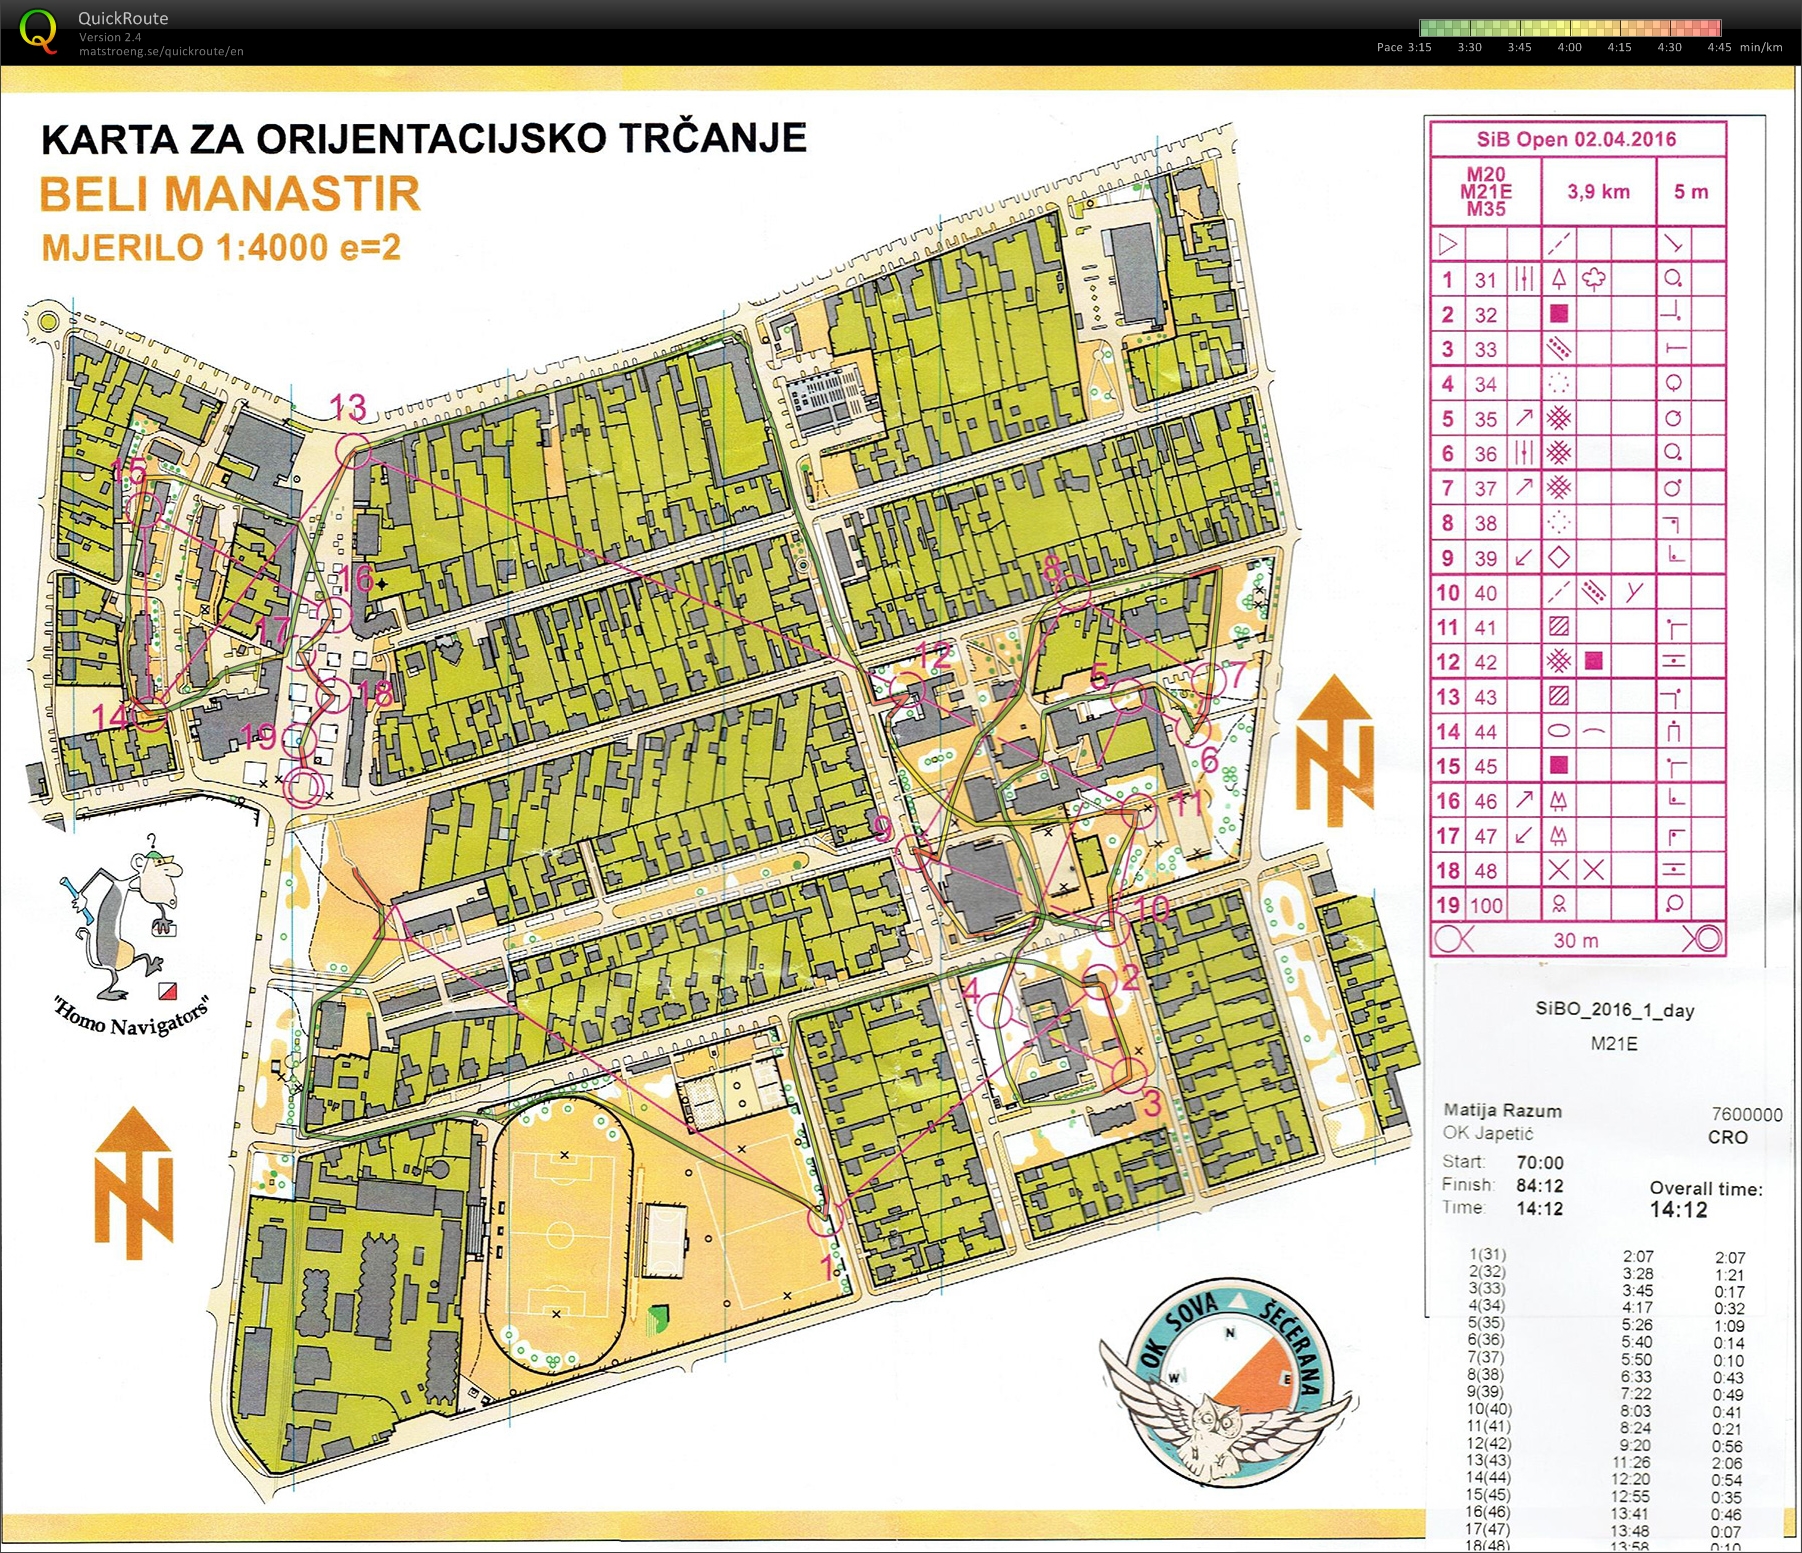 Slavonija & Baranja open - E1, WRE sprint (02-04-2016)